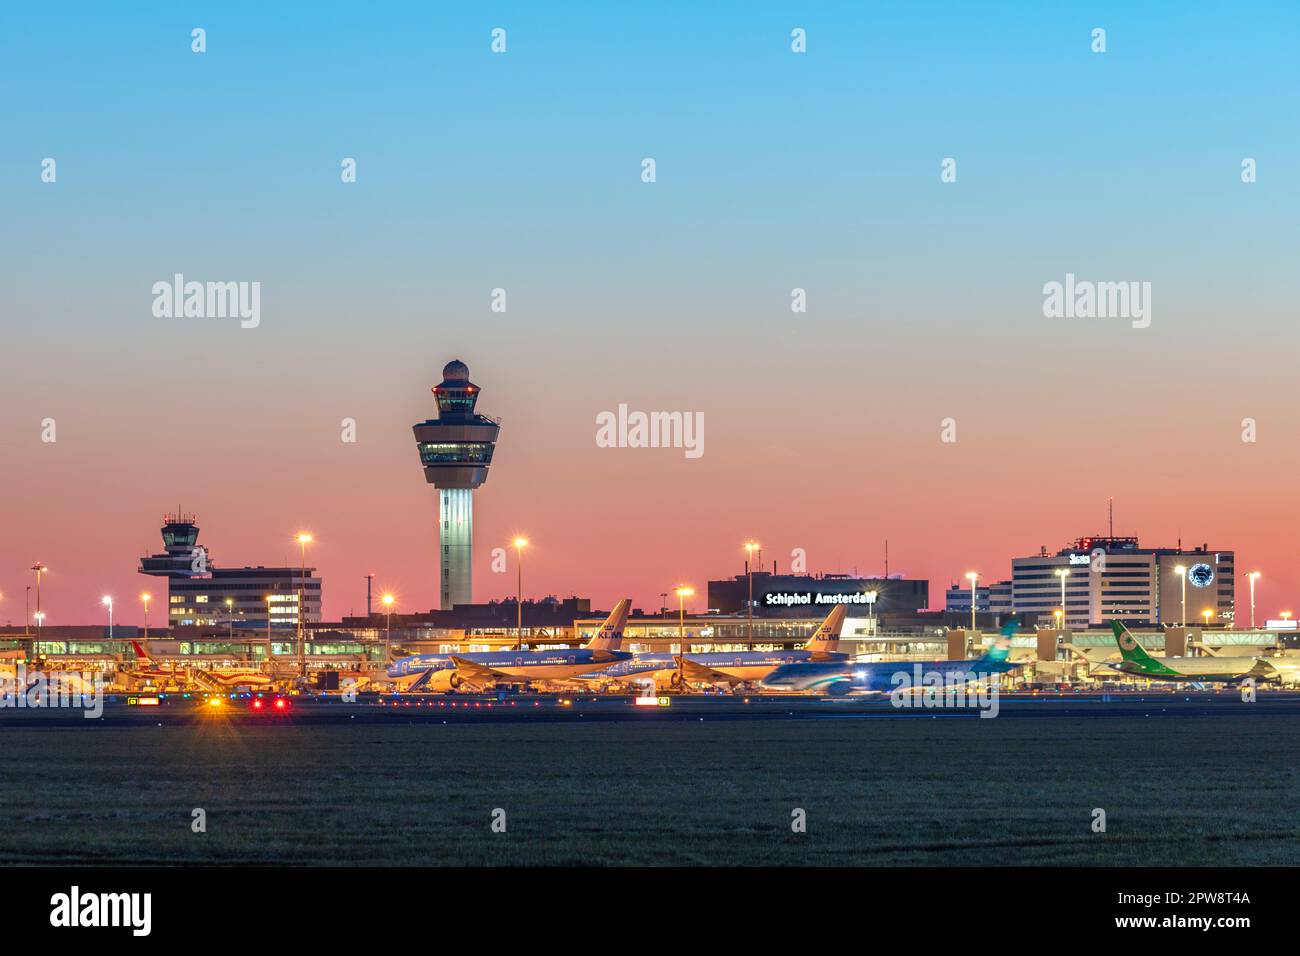 Niederlande, Haarlemmermeer, Amsterdam Schiphol Airport, KLM, Twilight, Abenddämmerung. Kontrollturm. Stockfoto